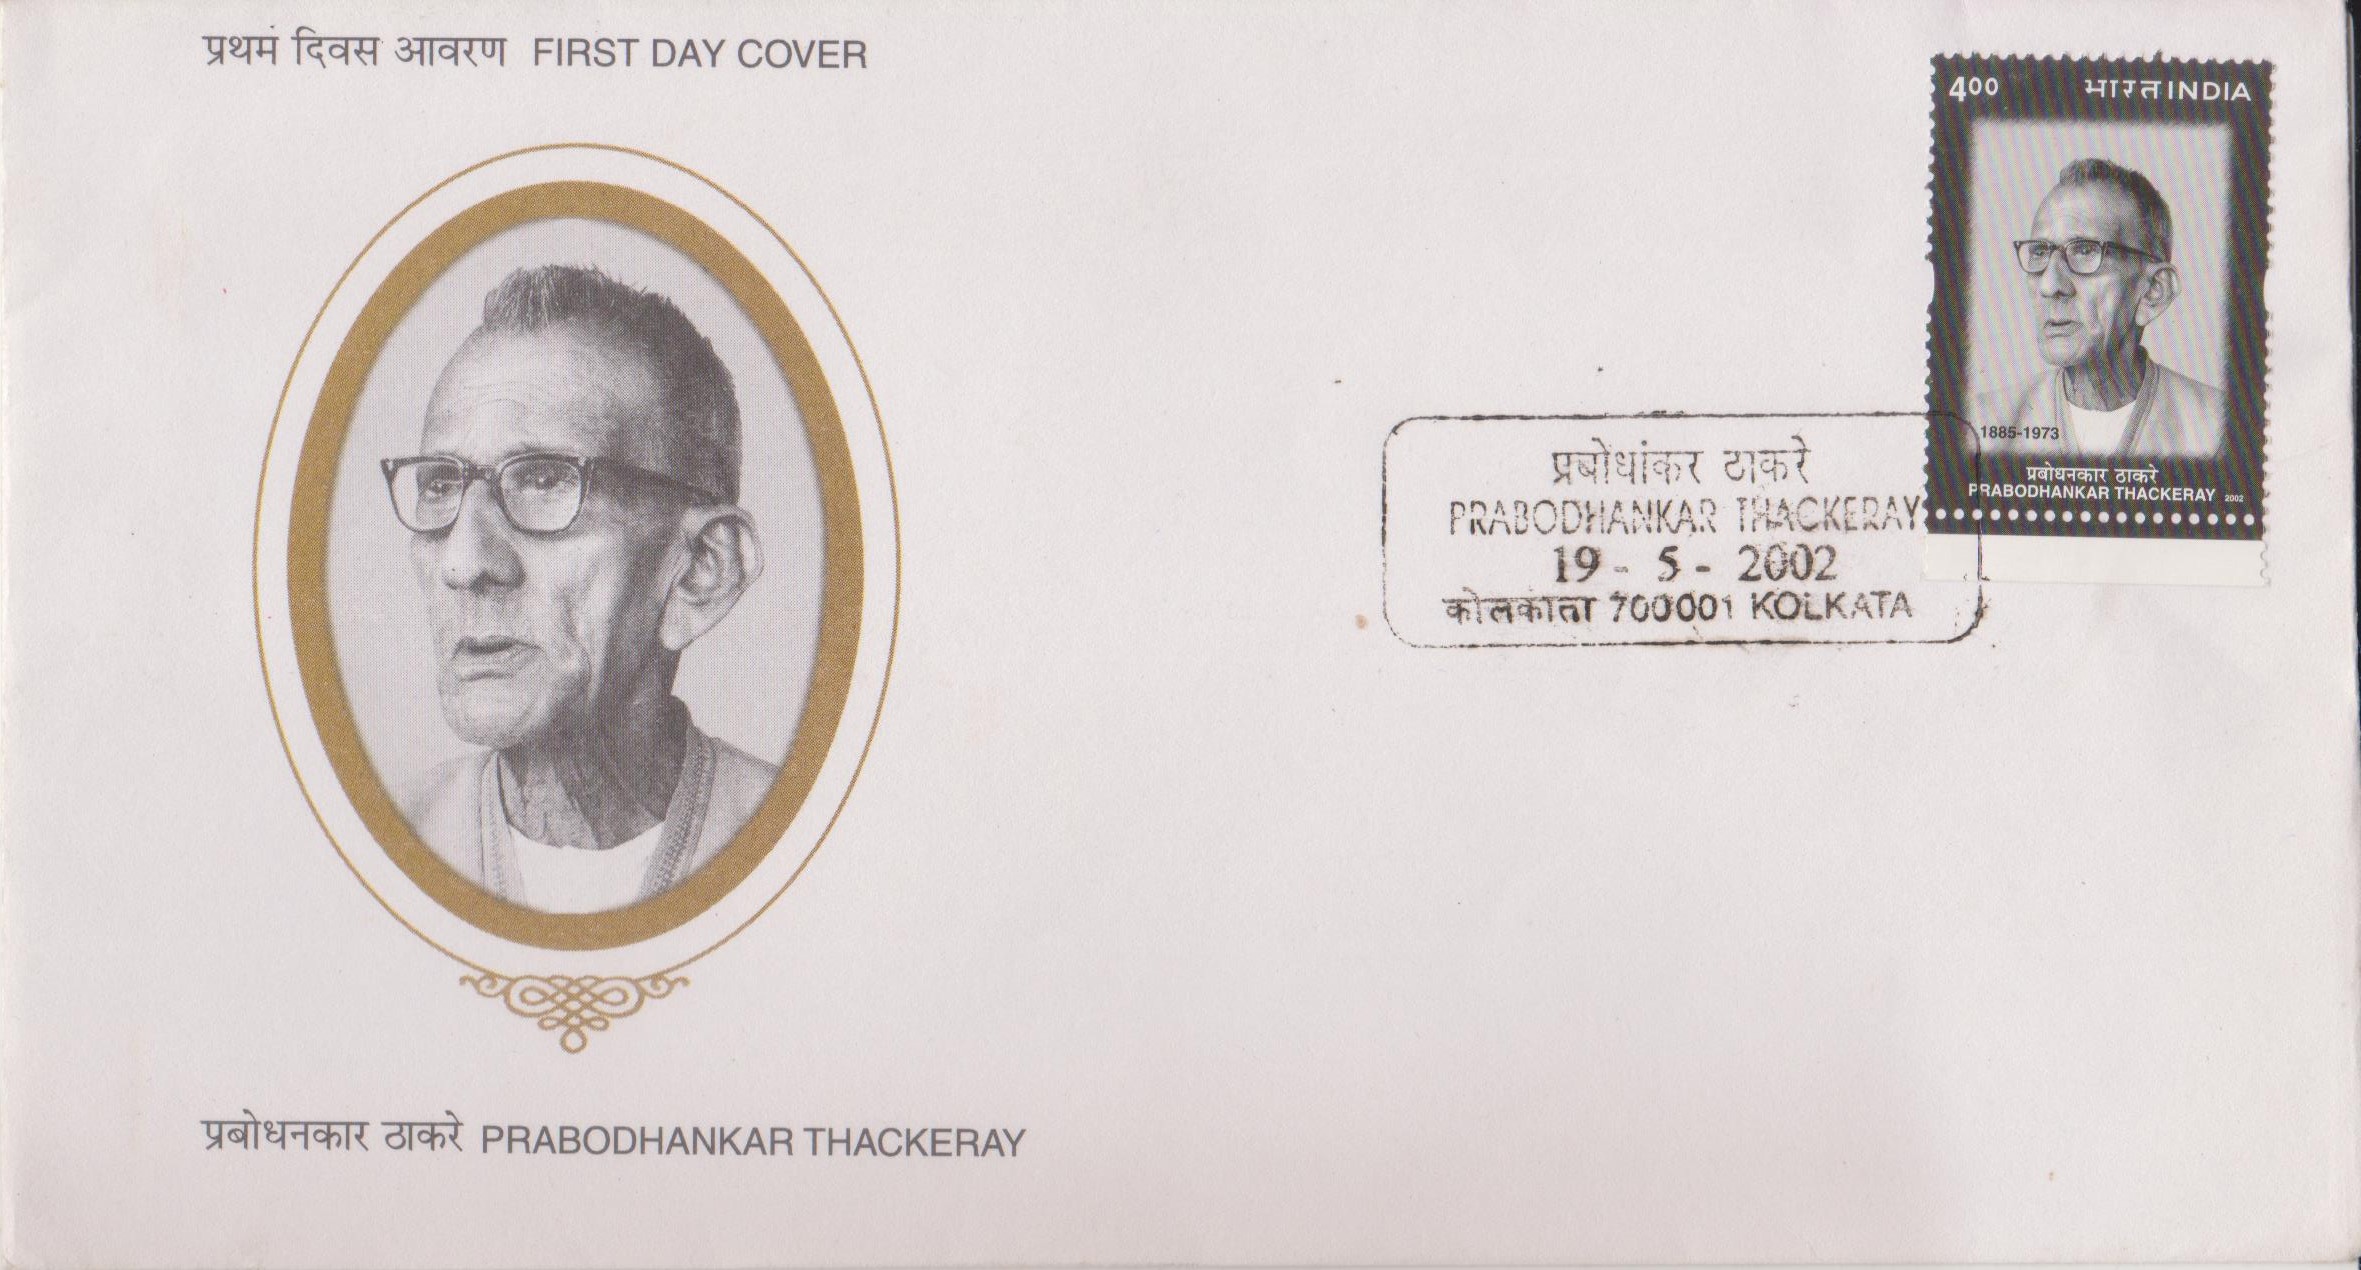 Prabodhankar Thackeray : Father of Bal Thackeray (Shiv Sena)